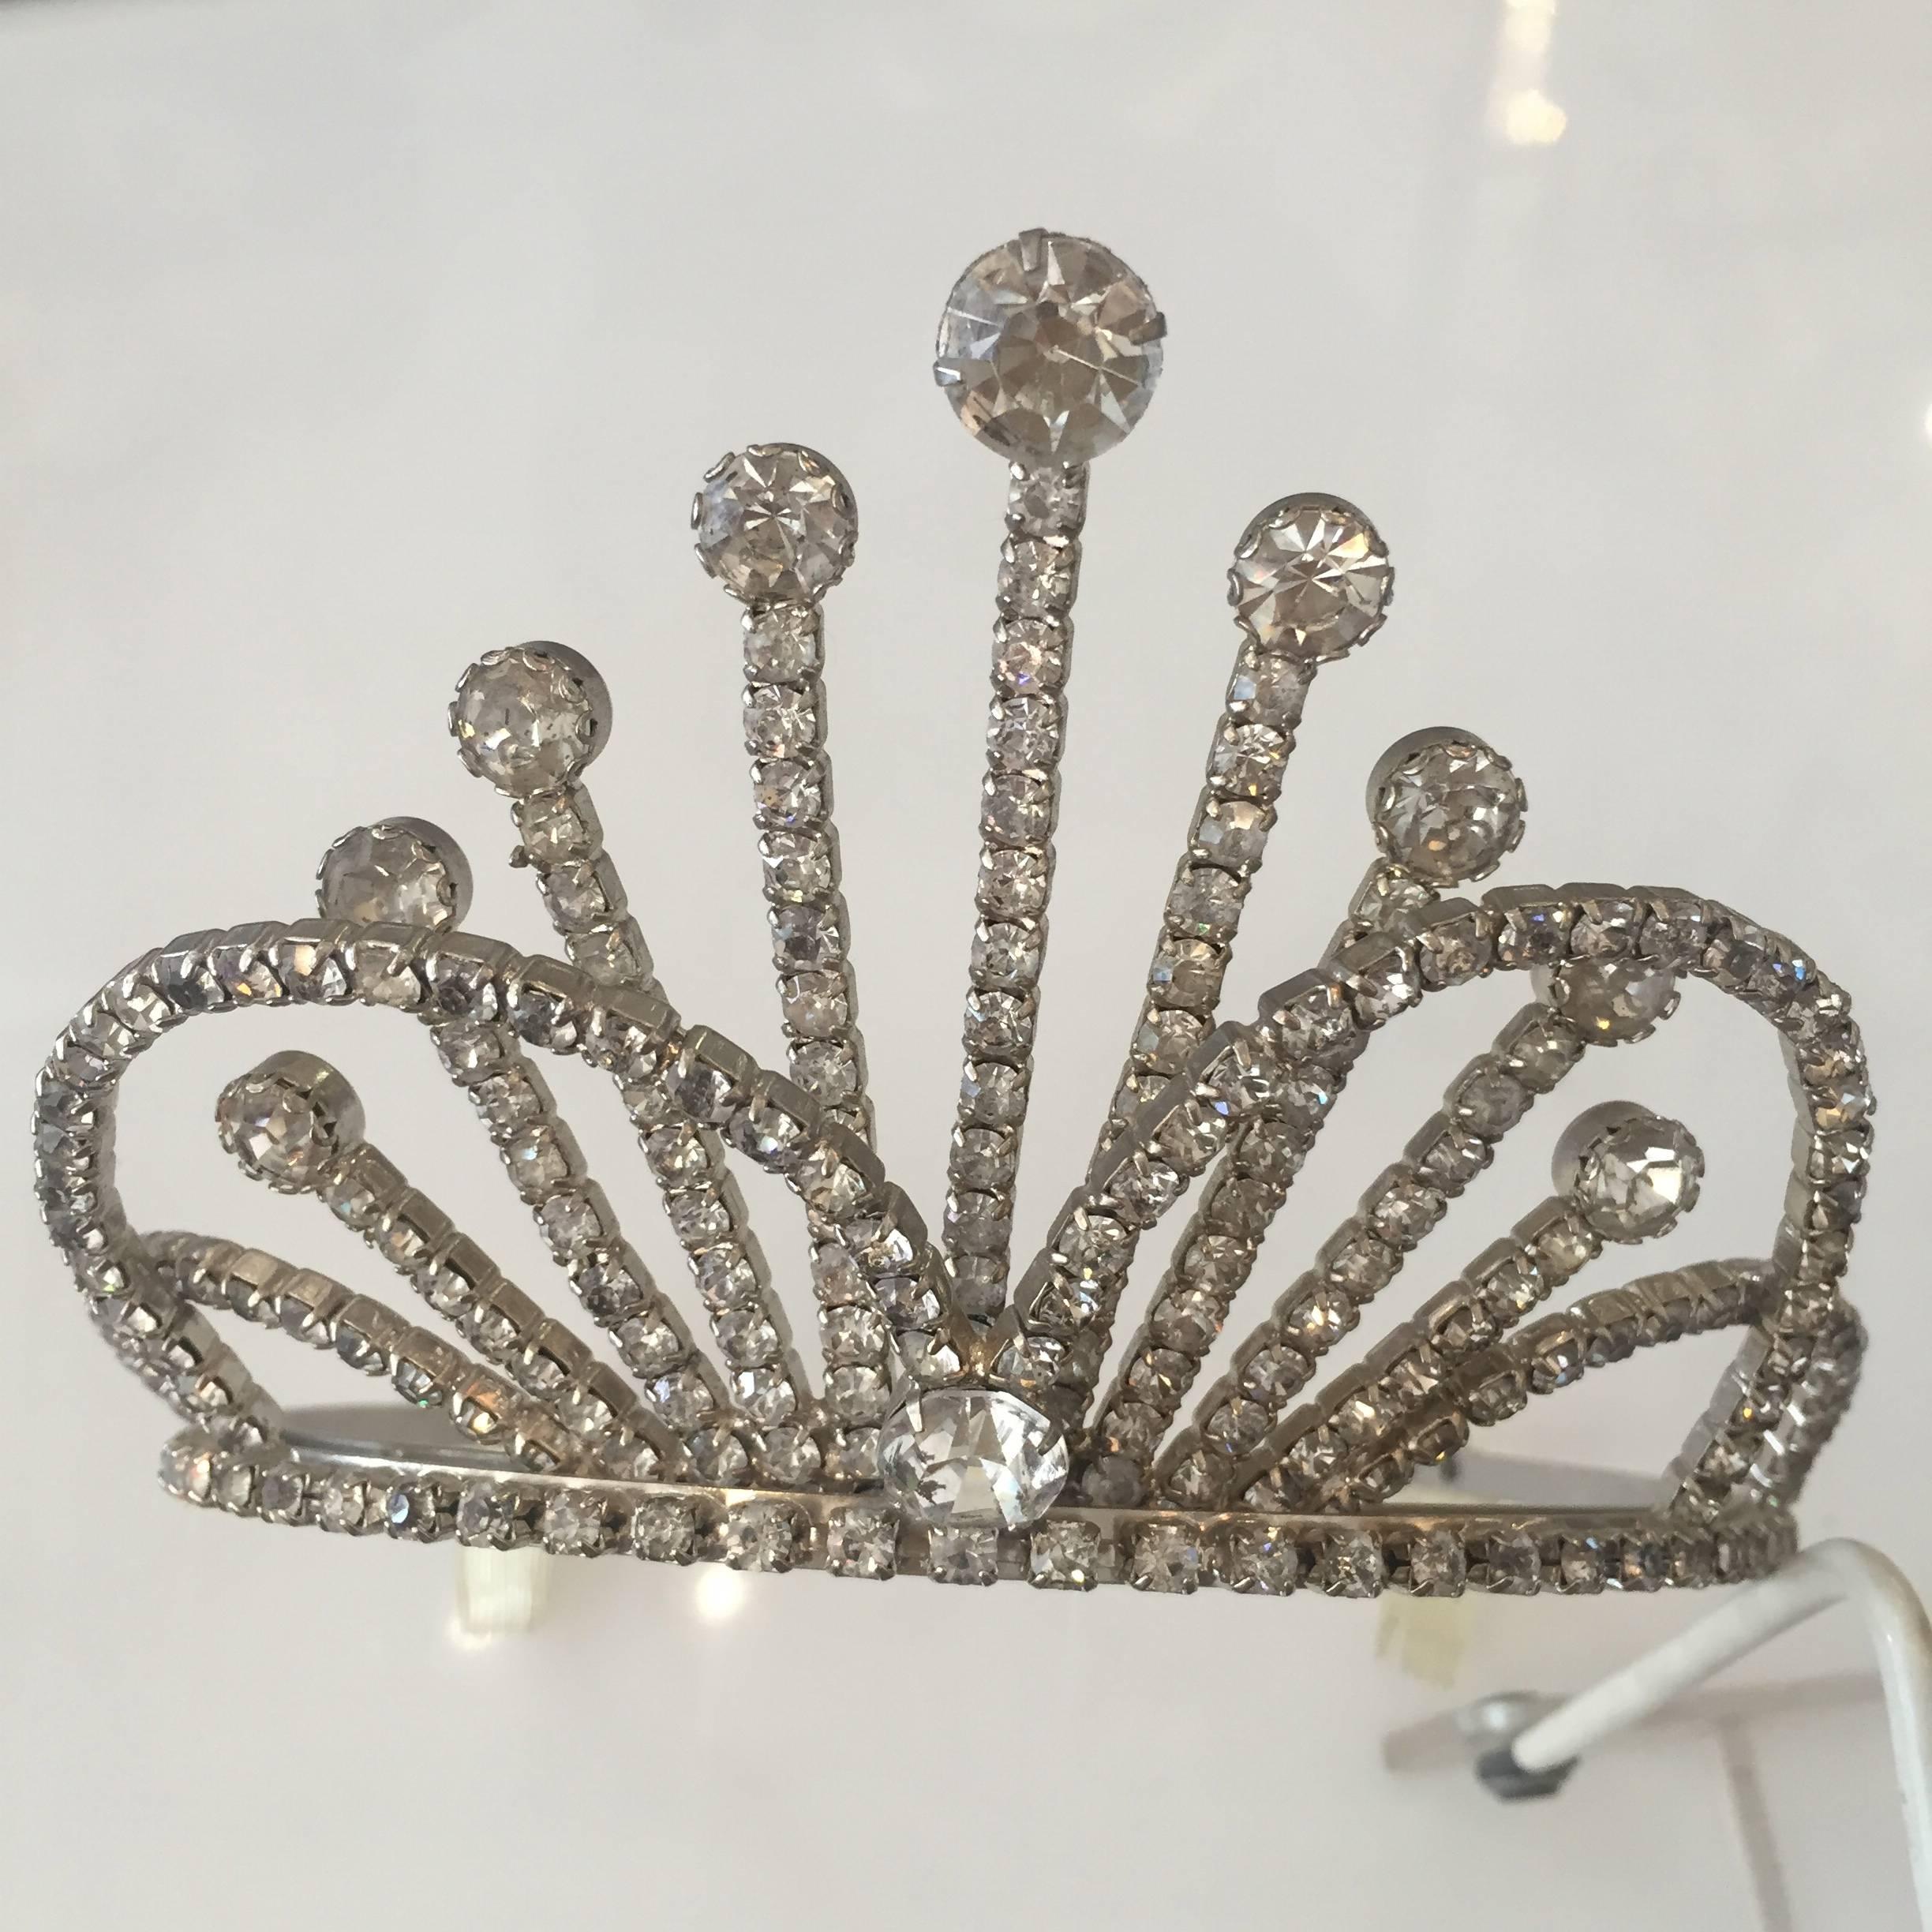 Vintage stainless steel and Rhinestone Tiara wedding crown, excellent quality,

circa 1950.

Measures: 3 1/2